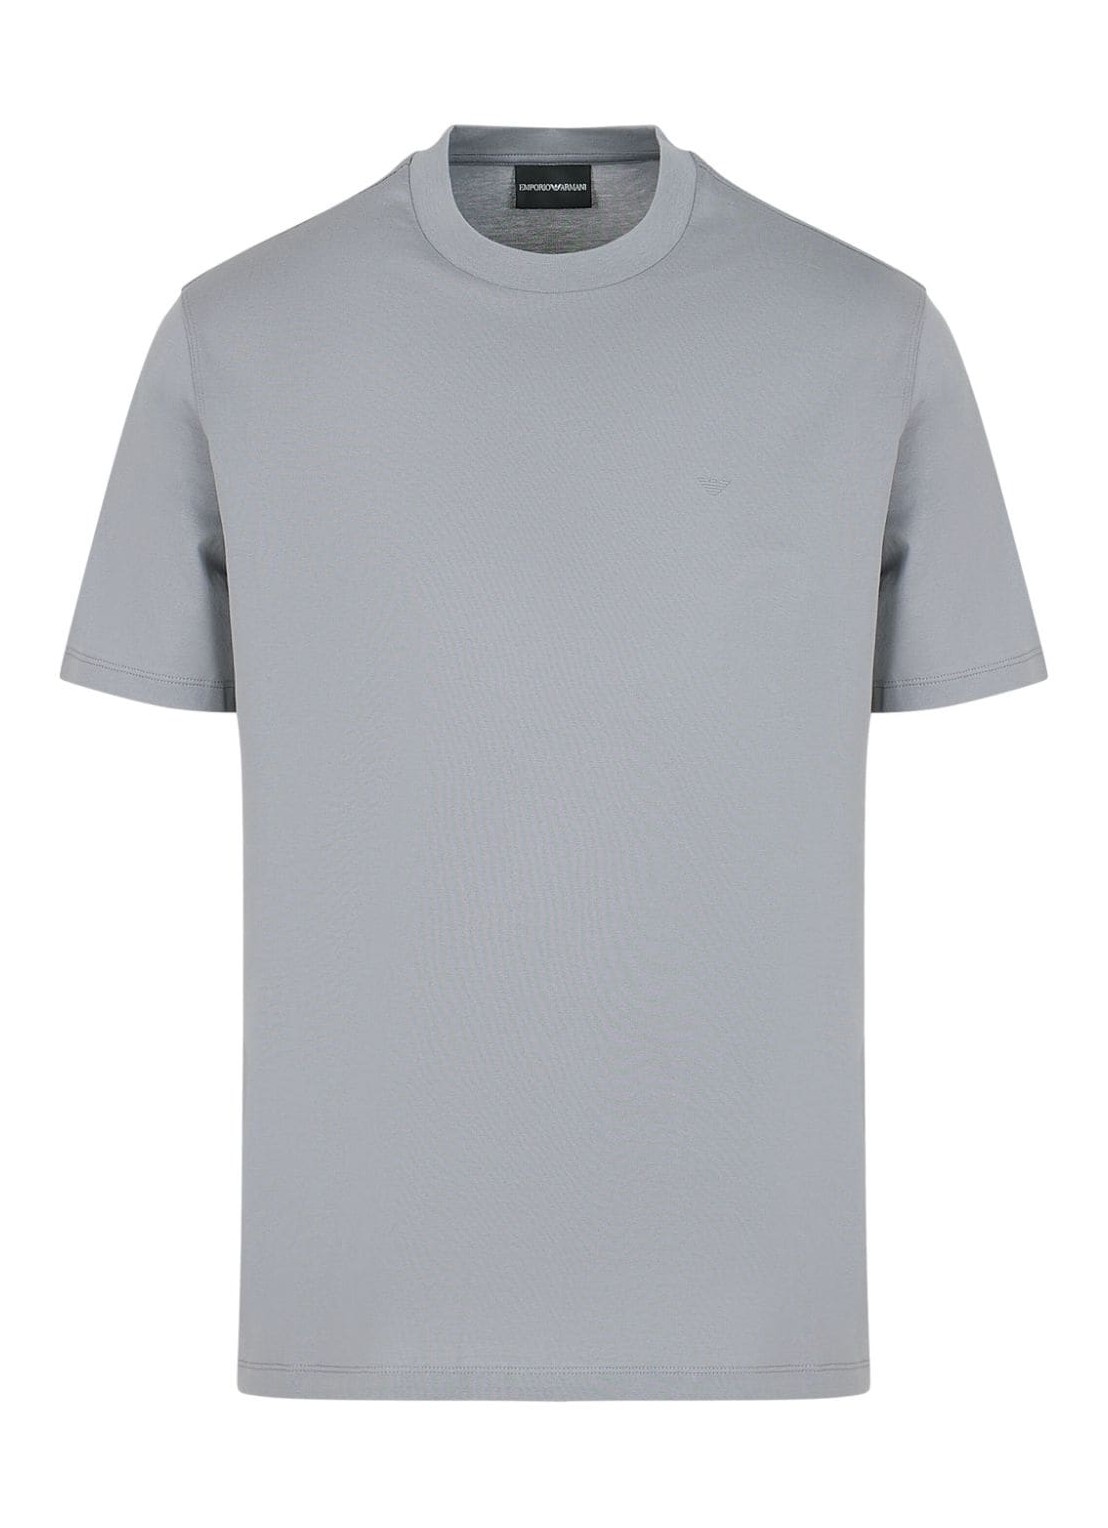 Camiseta emporio armani t-shirt man em000079af10094 em000079af10094 u8060 talla gris
 